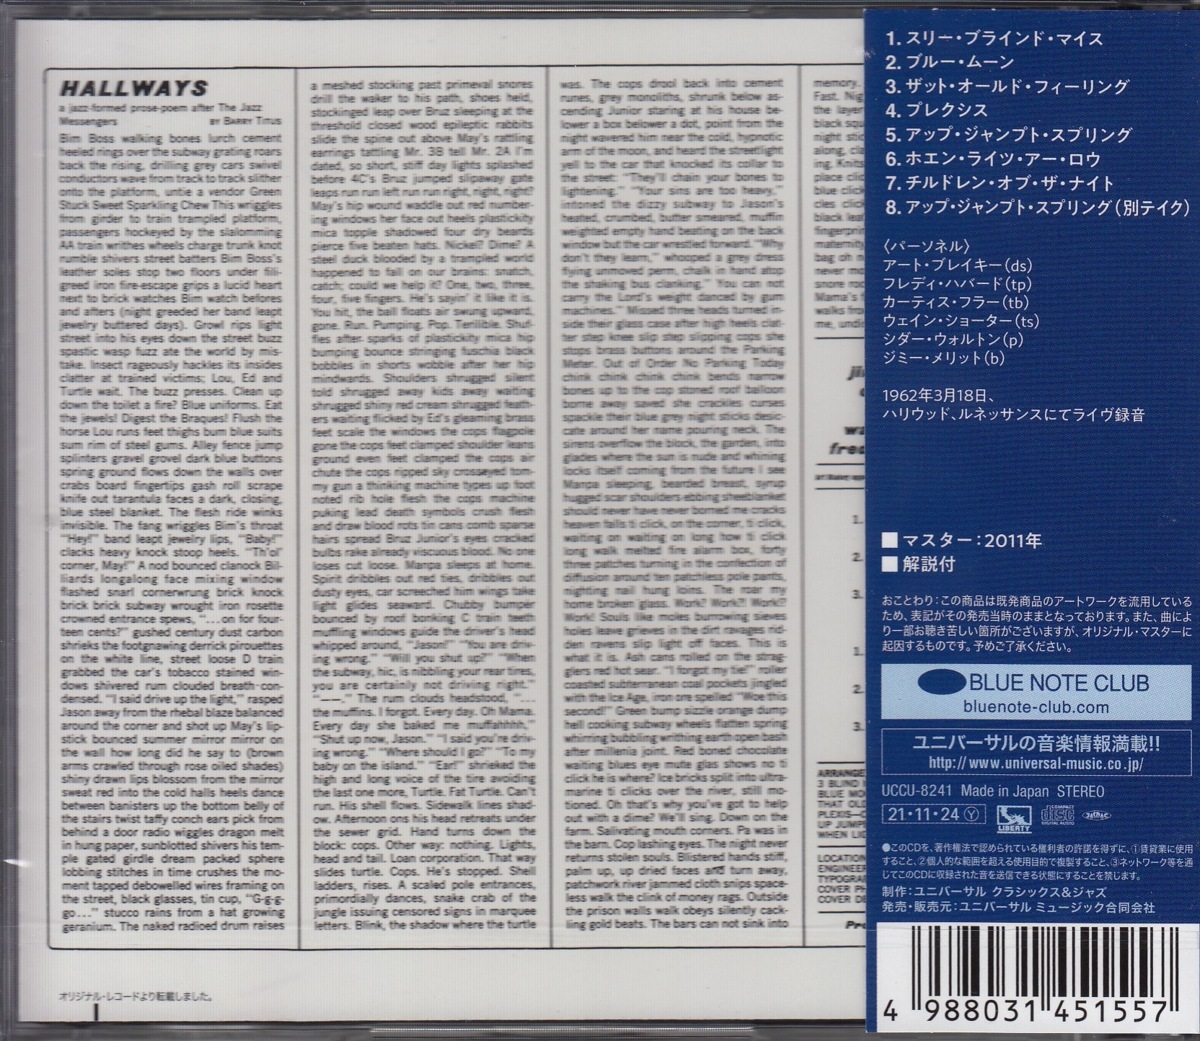 [CD] art * Bray key & The * Jazz *mesenja-z/s Lee * blind *ma chair / new goods CD JAZZ. warehouse. name record [ new goods : postage 100 jpy ]